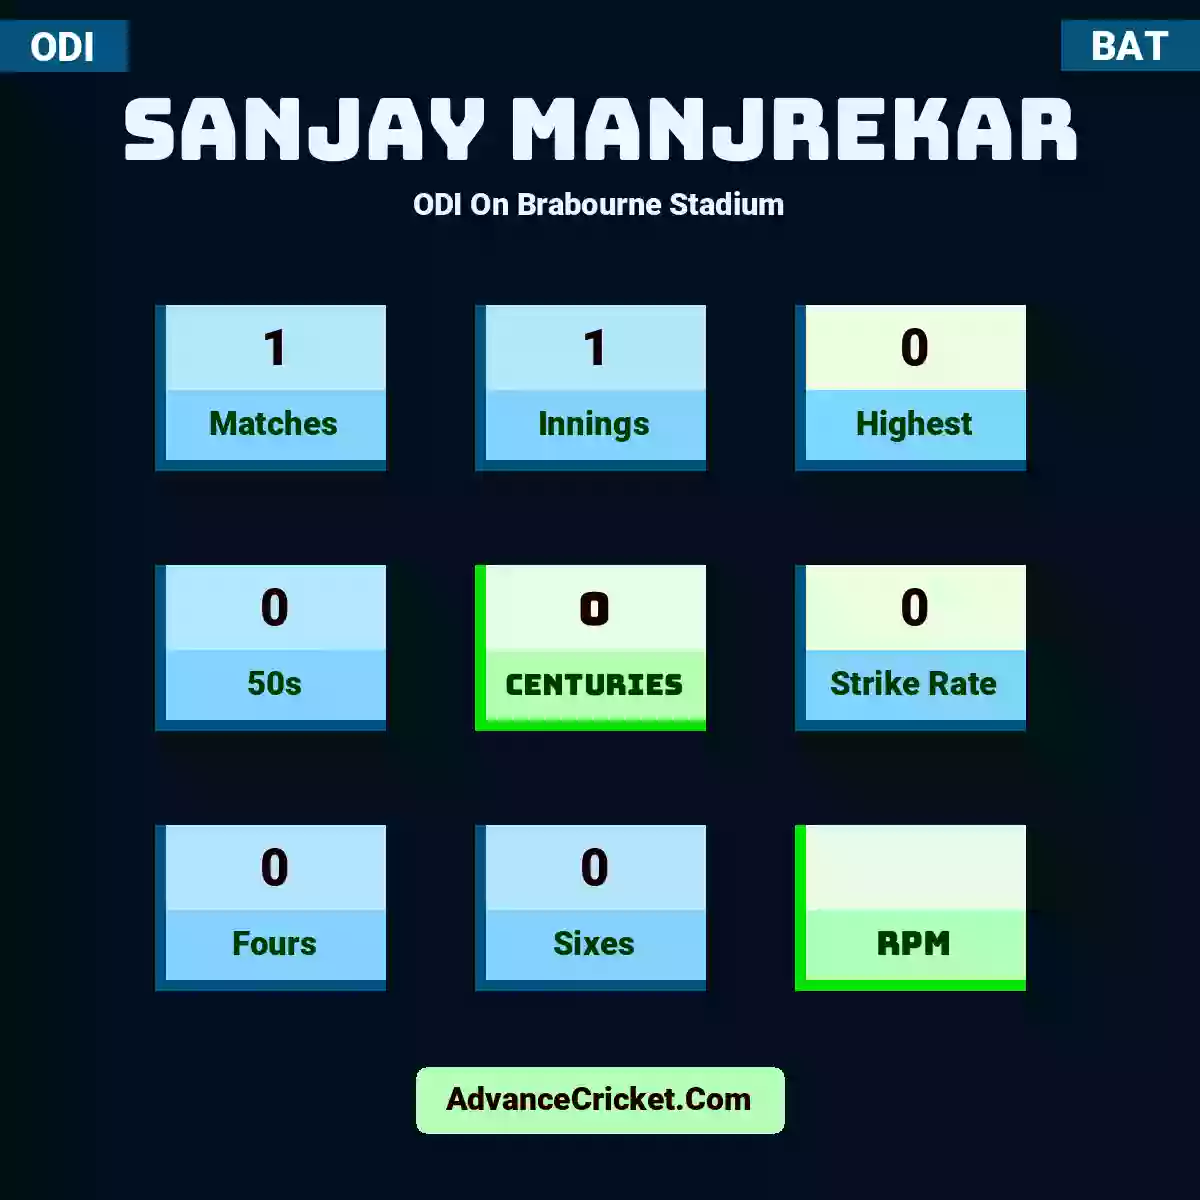 Sanjay Manjrekar ODI  On Brabourne Stadium, Sanjay Manjrekar played 1 matches, scored 0 runs as highest, 0 half-centuries, and 0 centuries, with a strike rate of 0. S.Manjrekar hit 0 fours and 0 sixes.